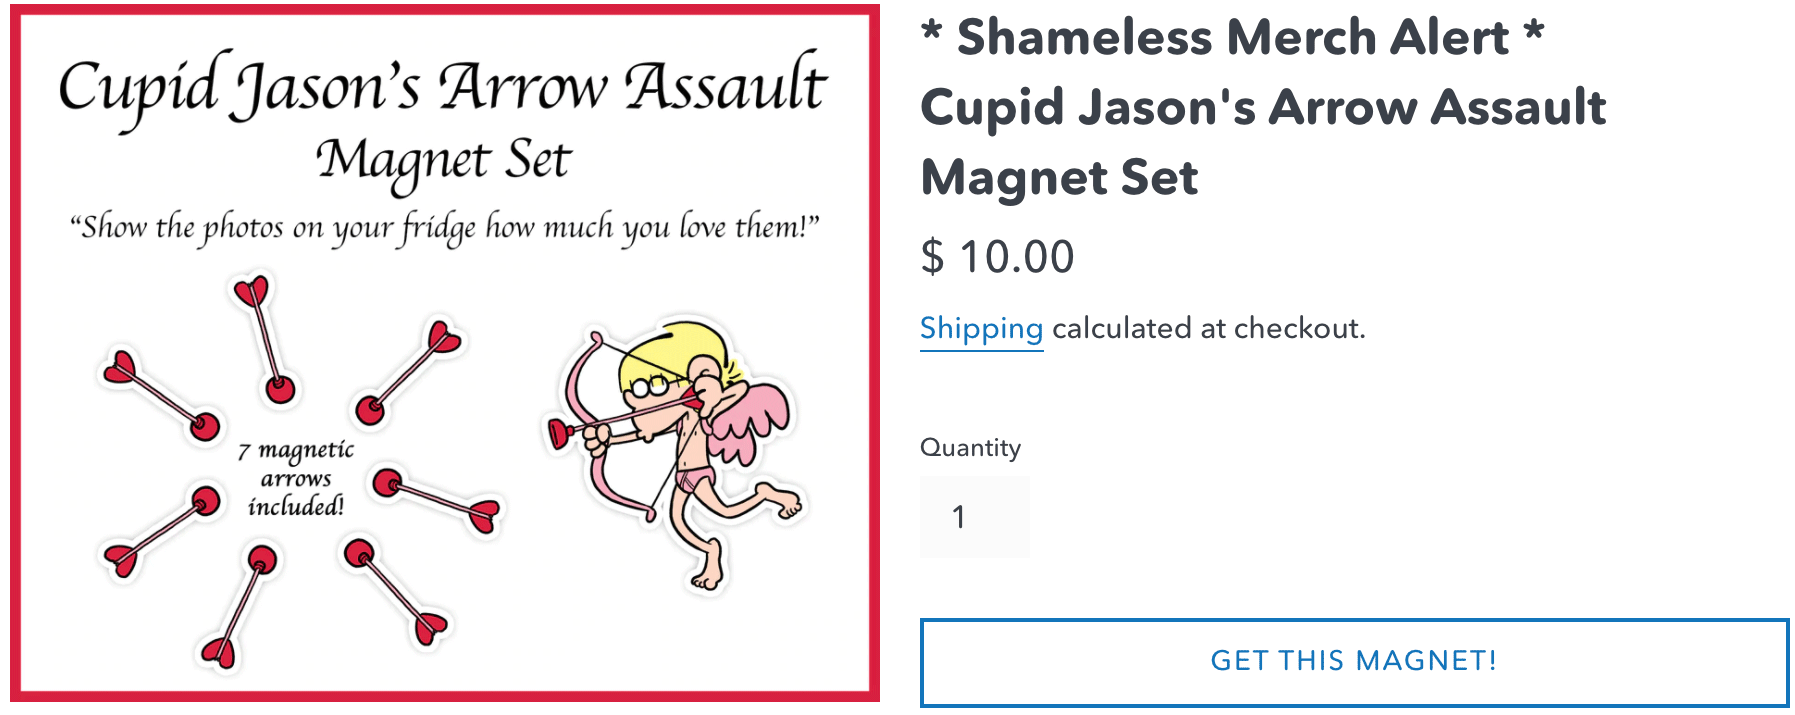 Cupid Jason's Arrow Assault - Magnet Set